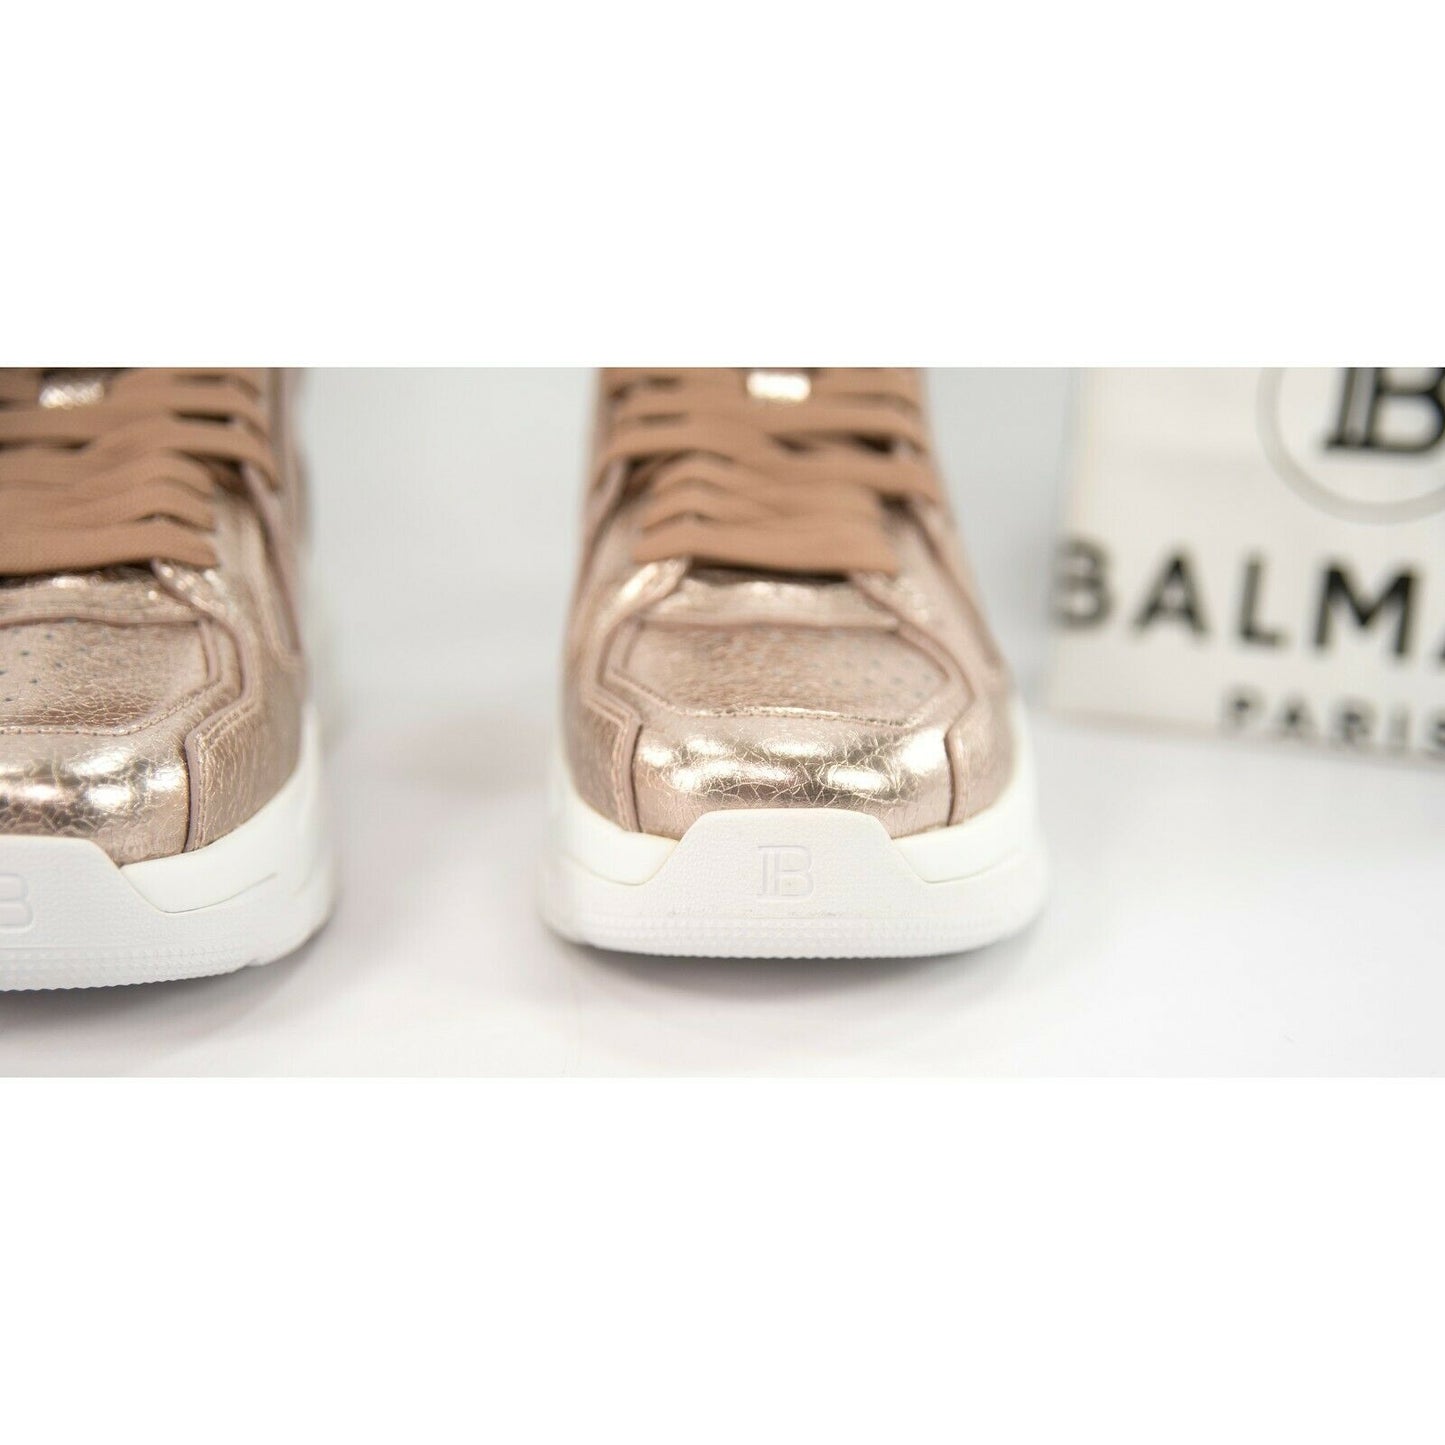 Balmain Rose Gold B-Ball High Top Leather Sneakers 38 NIB